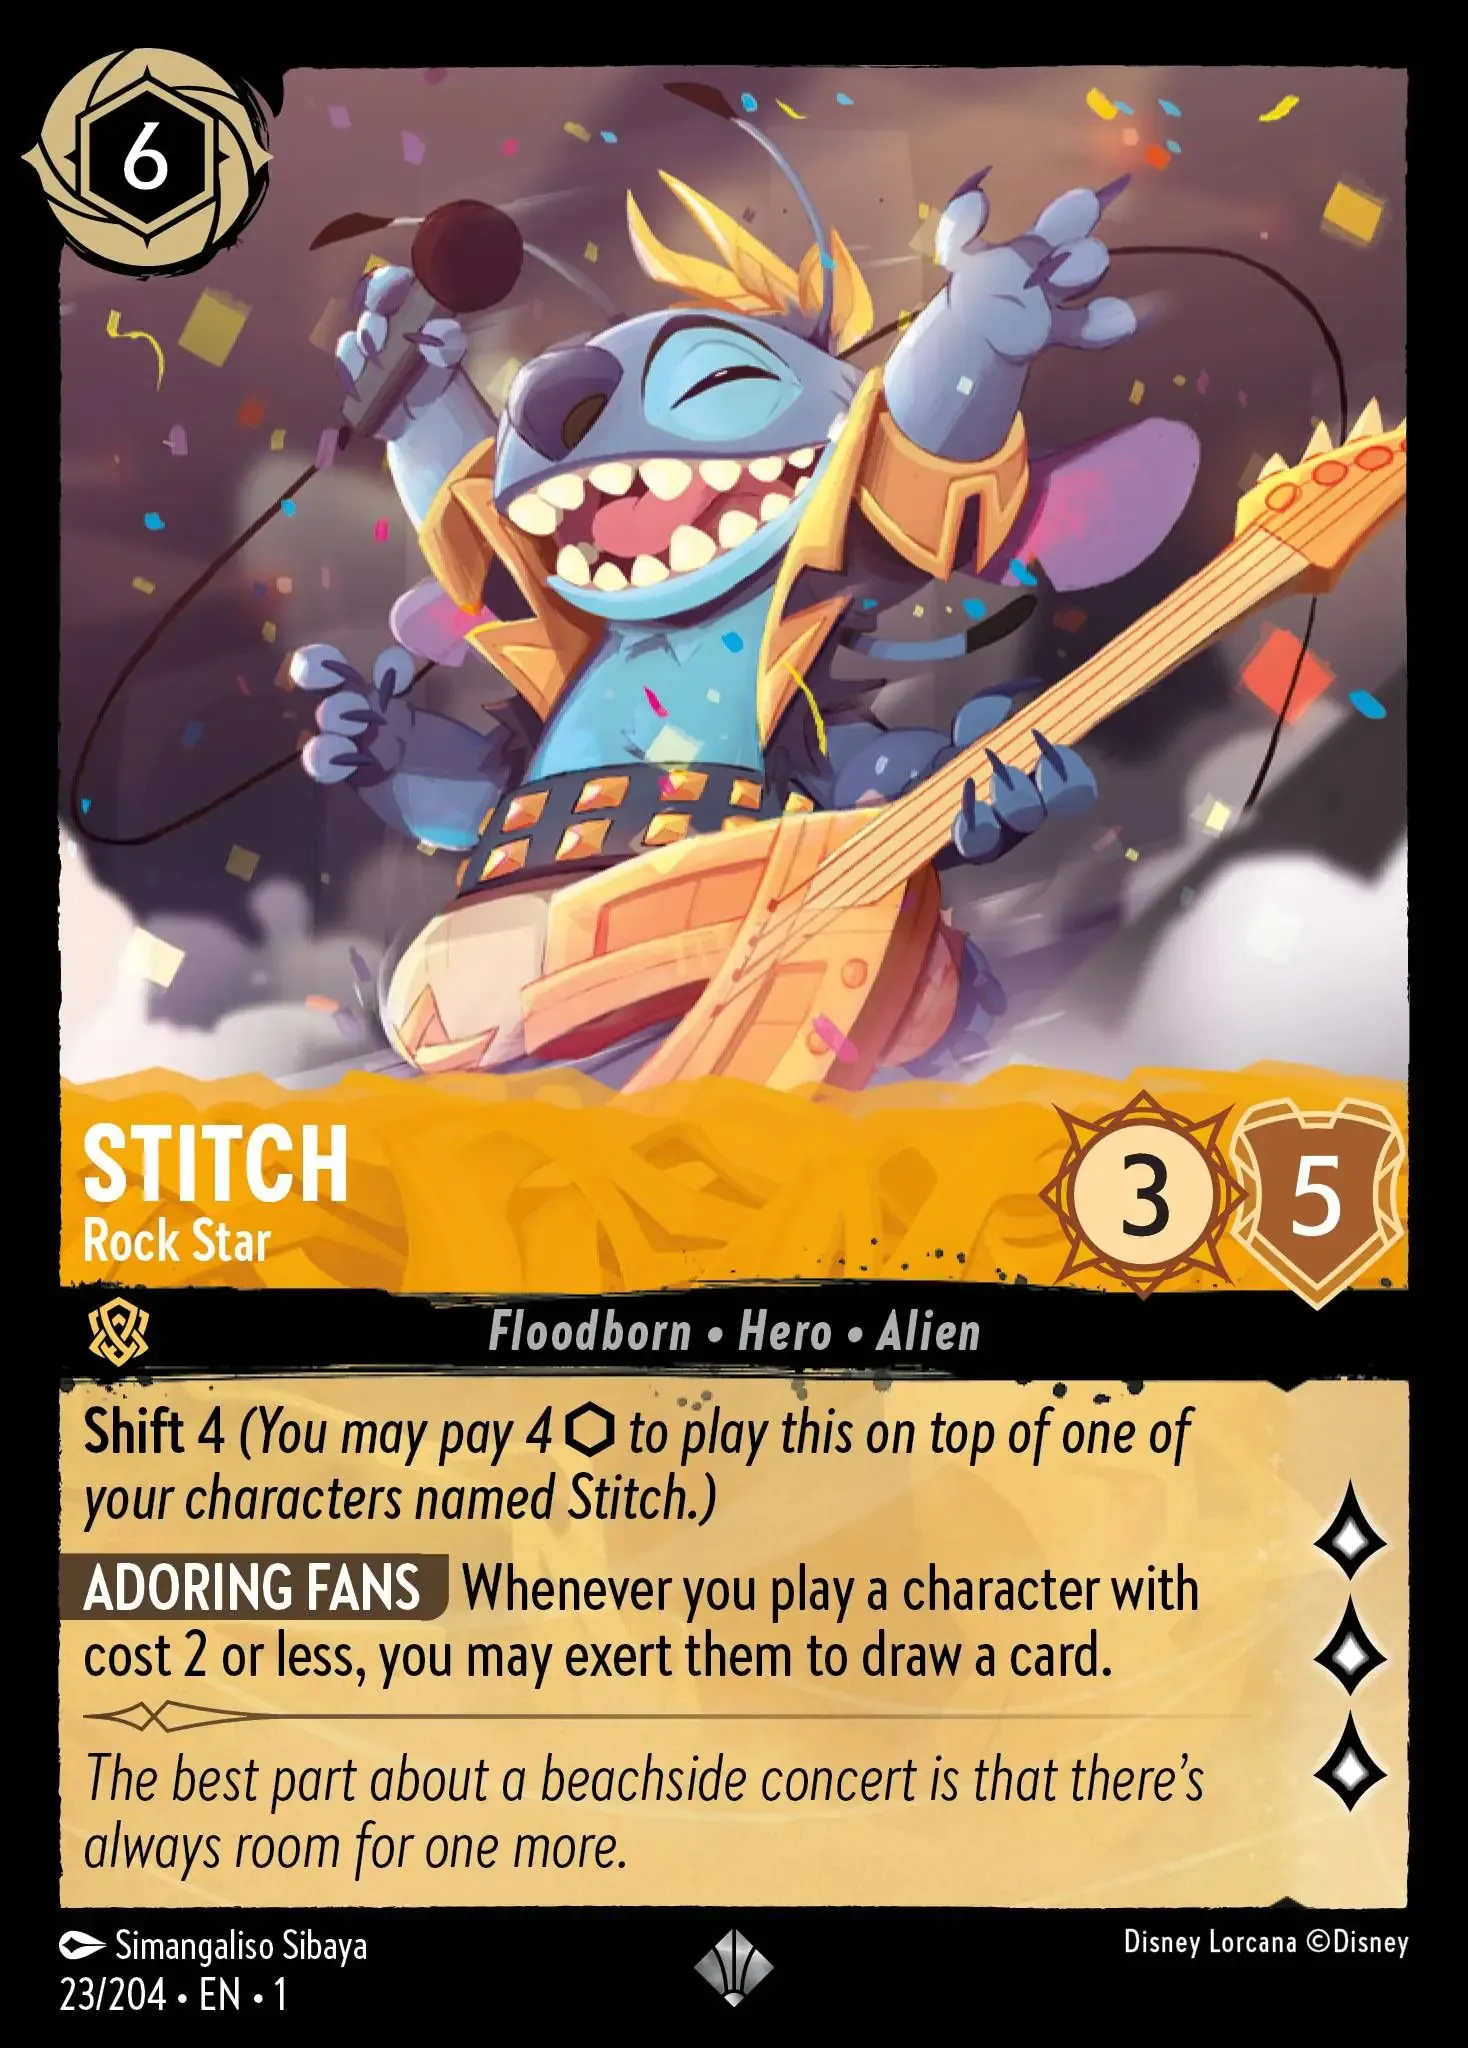 Stitch - Carefree Surfer Lorcana Card